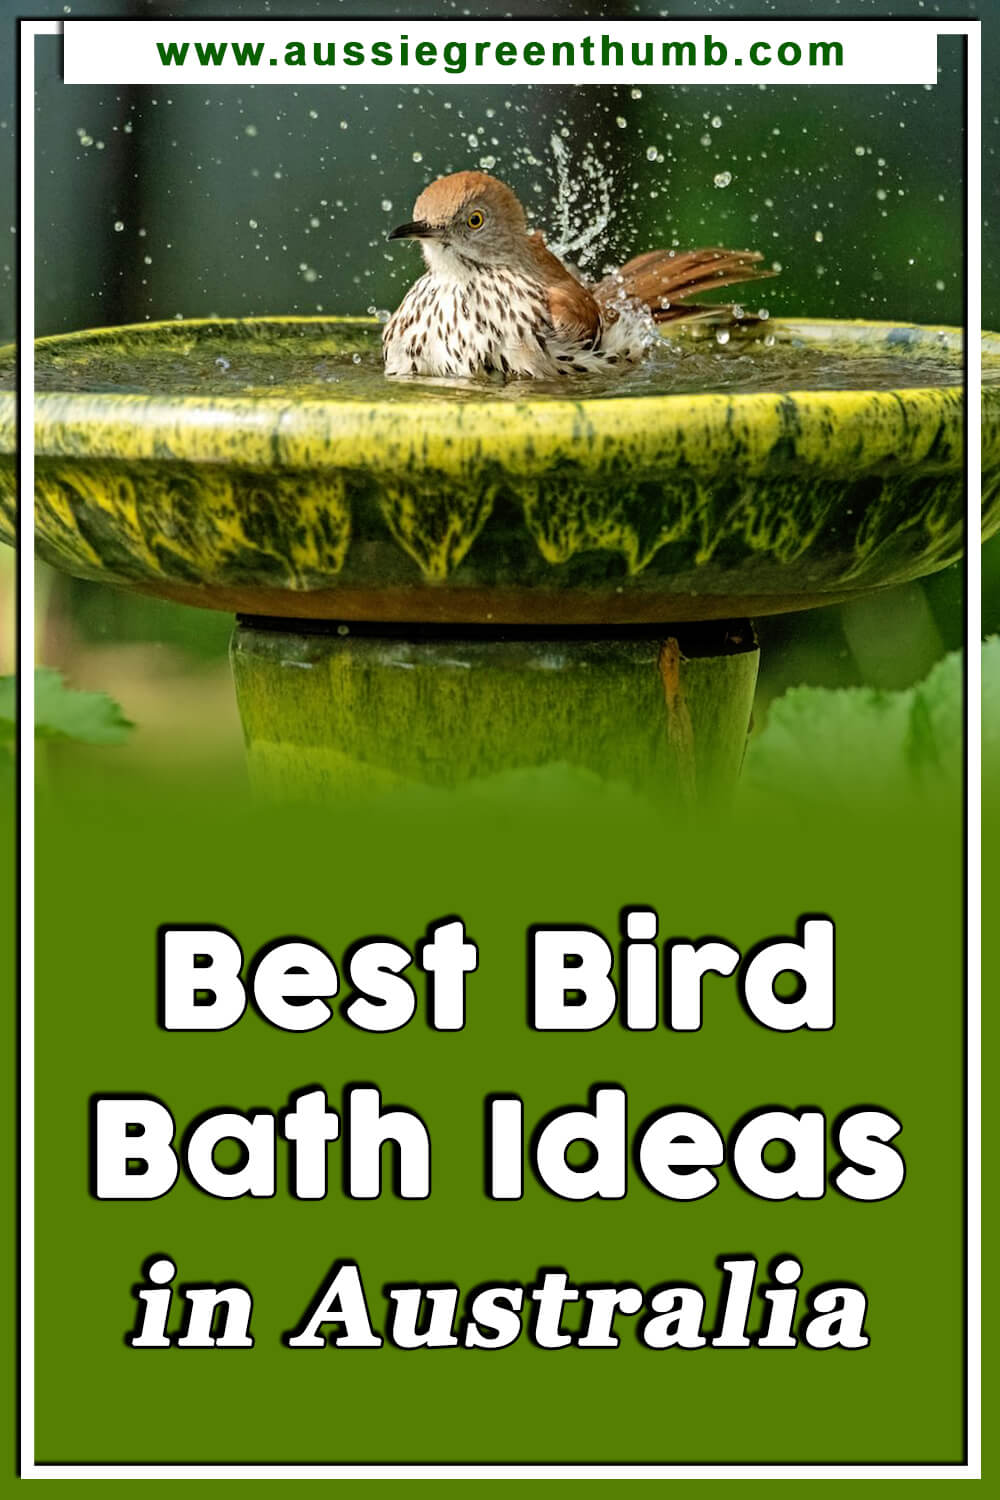 Best Bird Bath Ideas in Australia